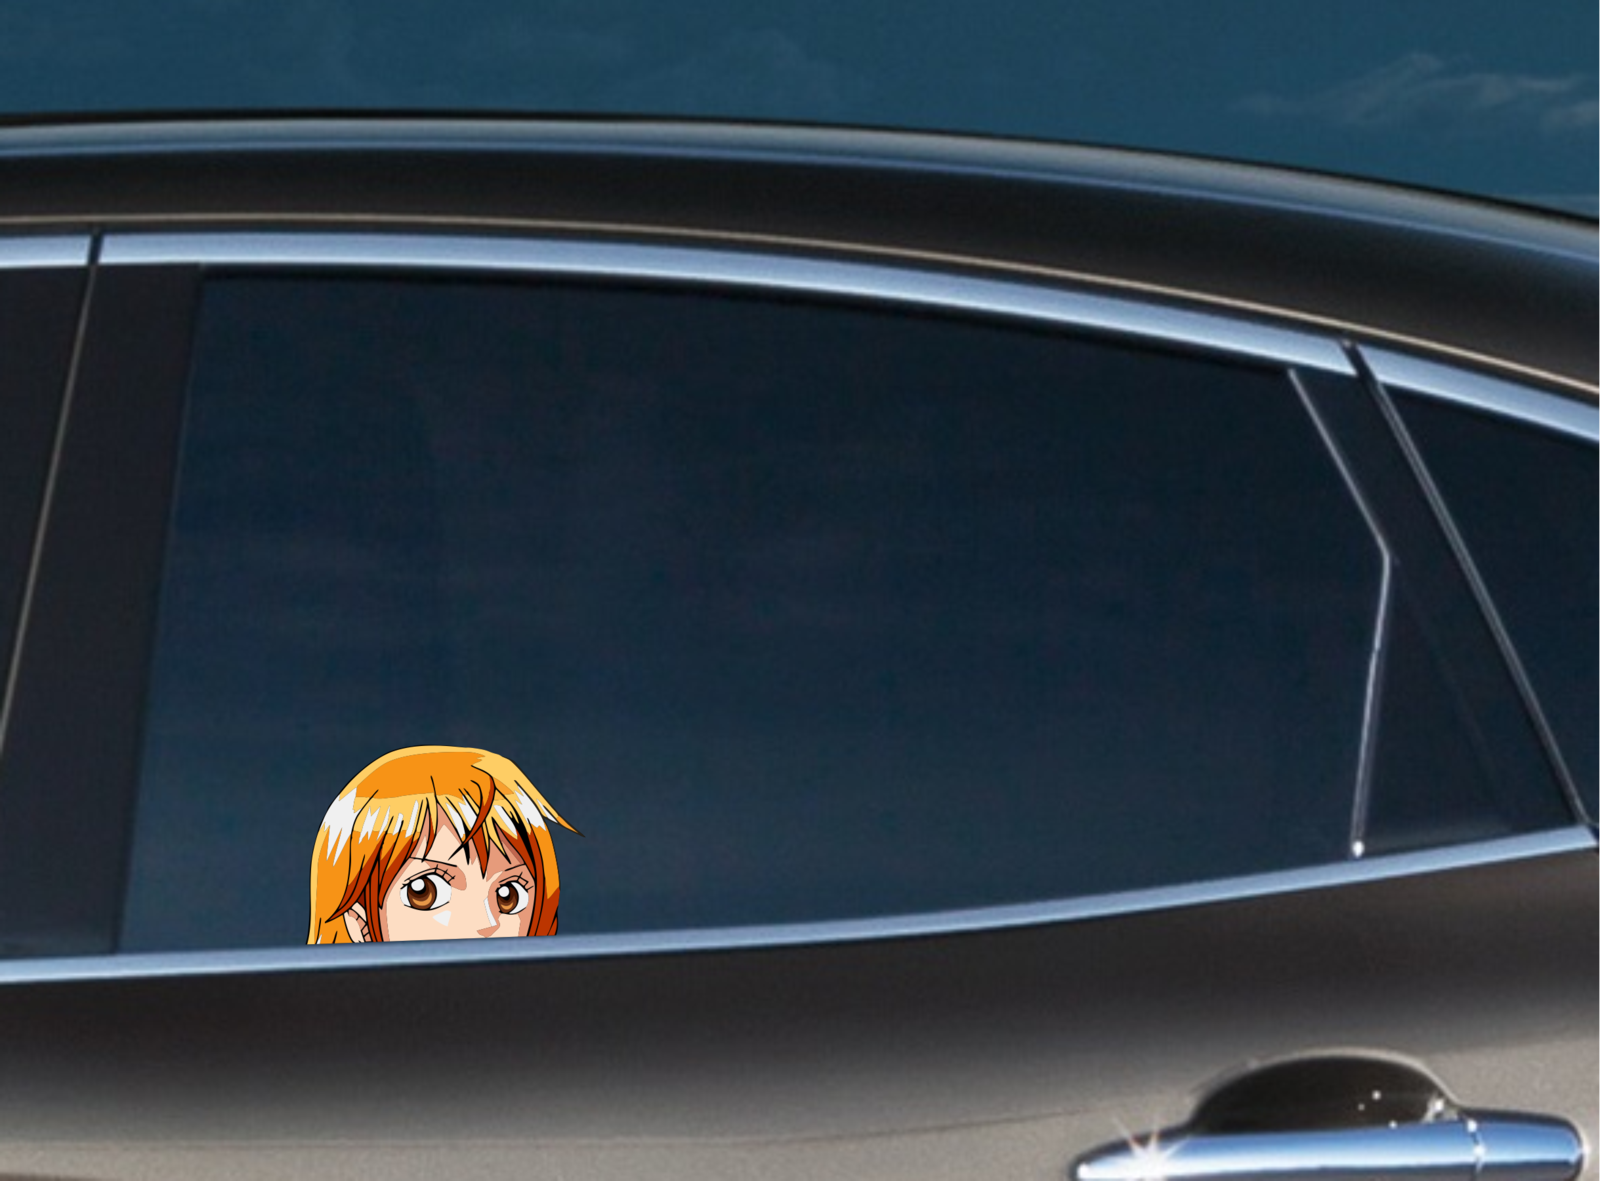 Nami #2 one piece Car Bumper Window Vinyl Decal Anime Stickers cartoon peeking